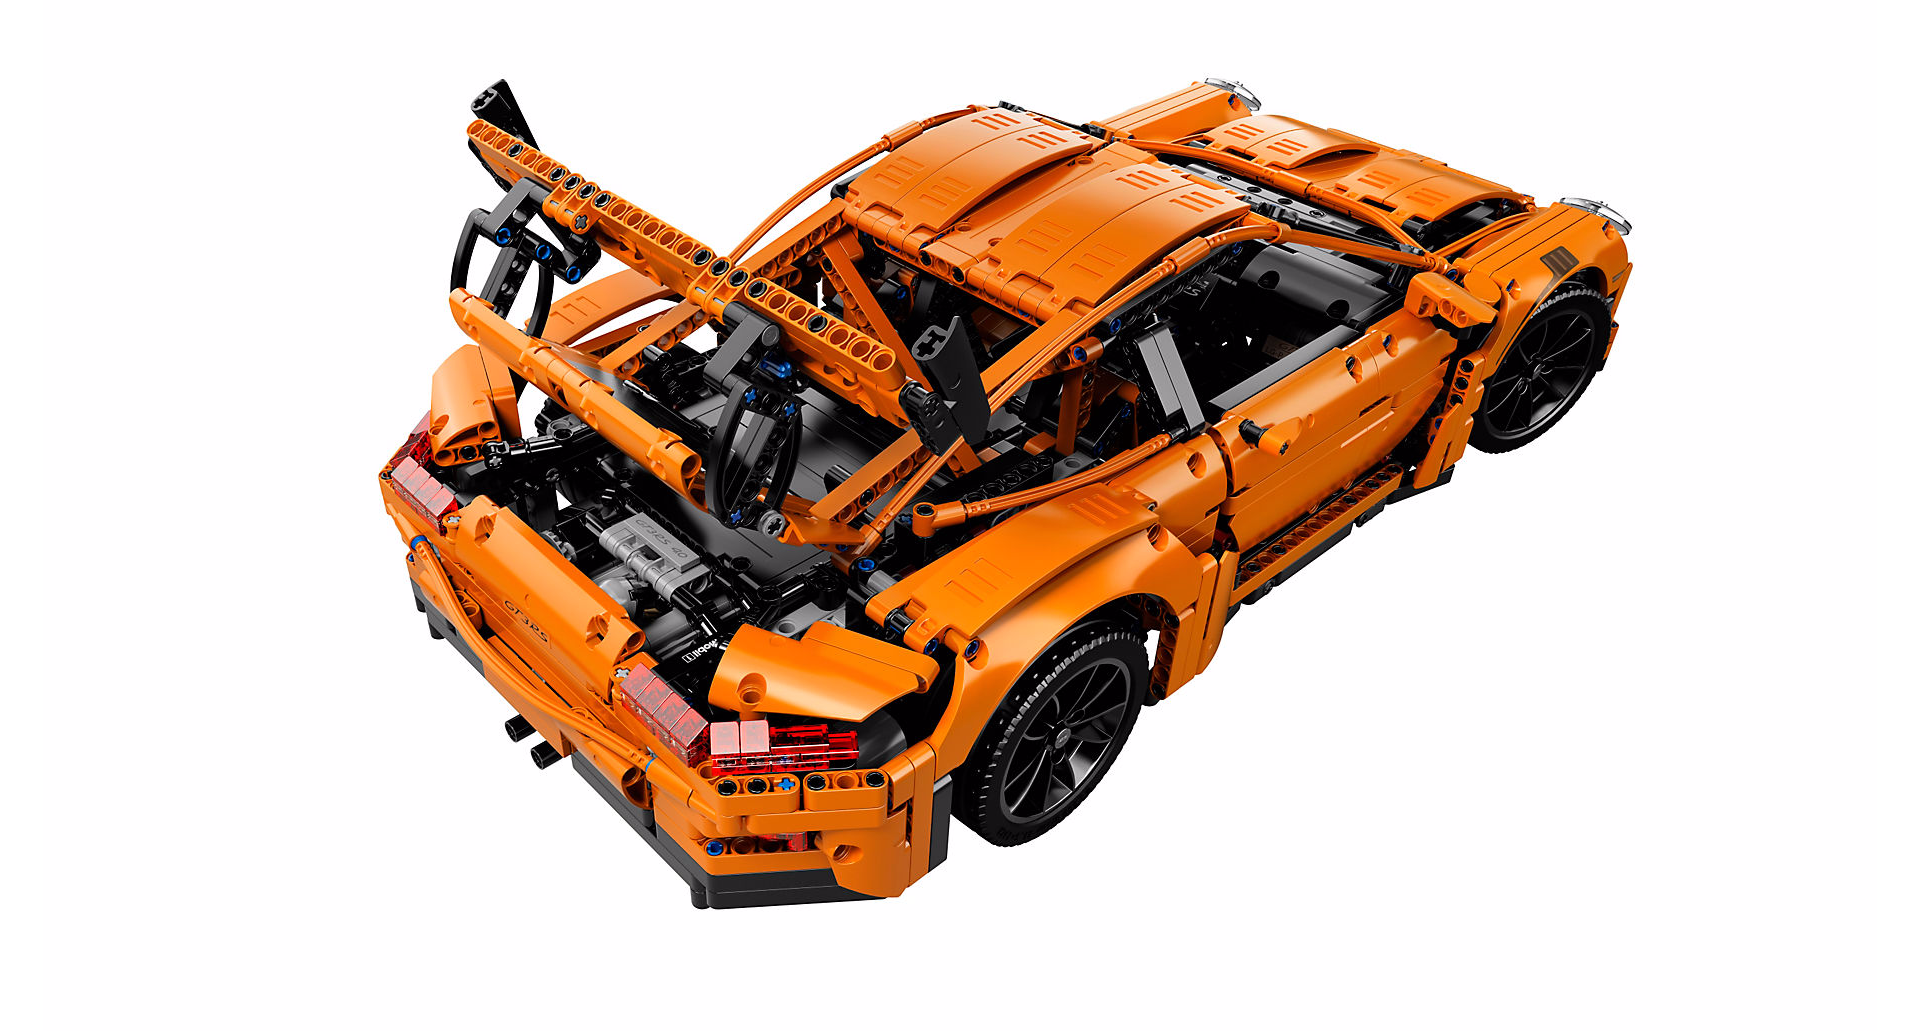 Lego Technic Porsche 911 Gt3 Rs